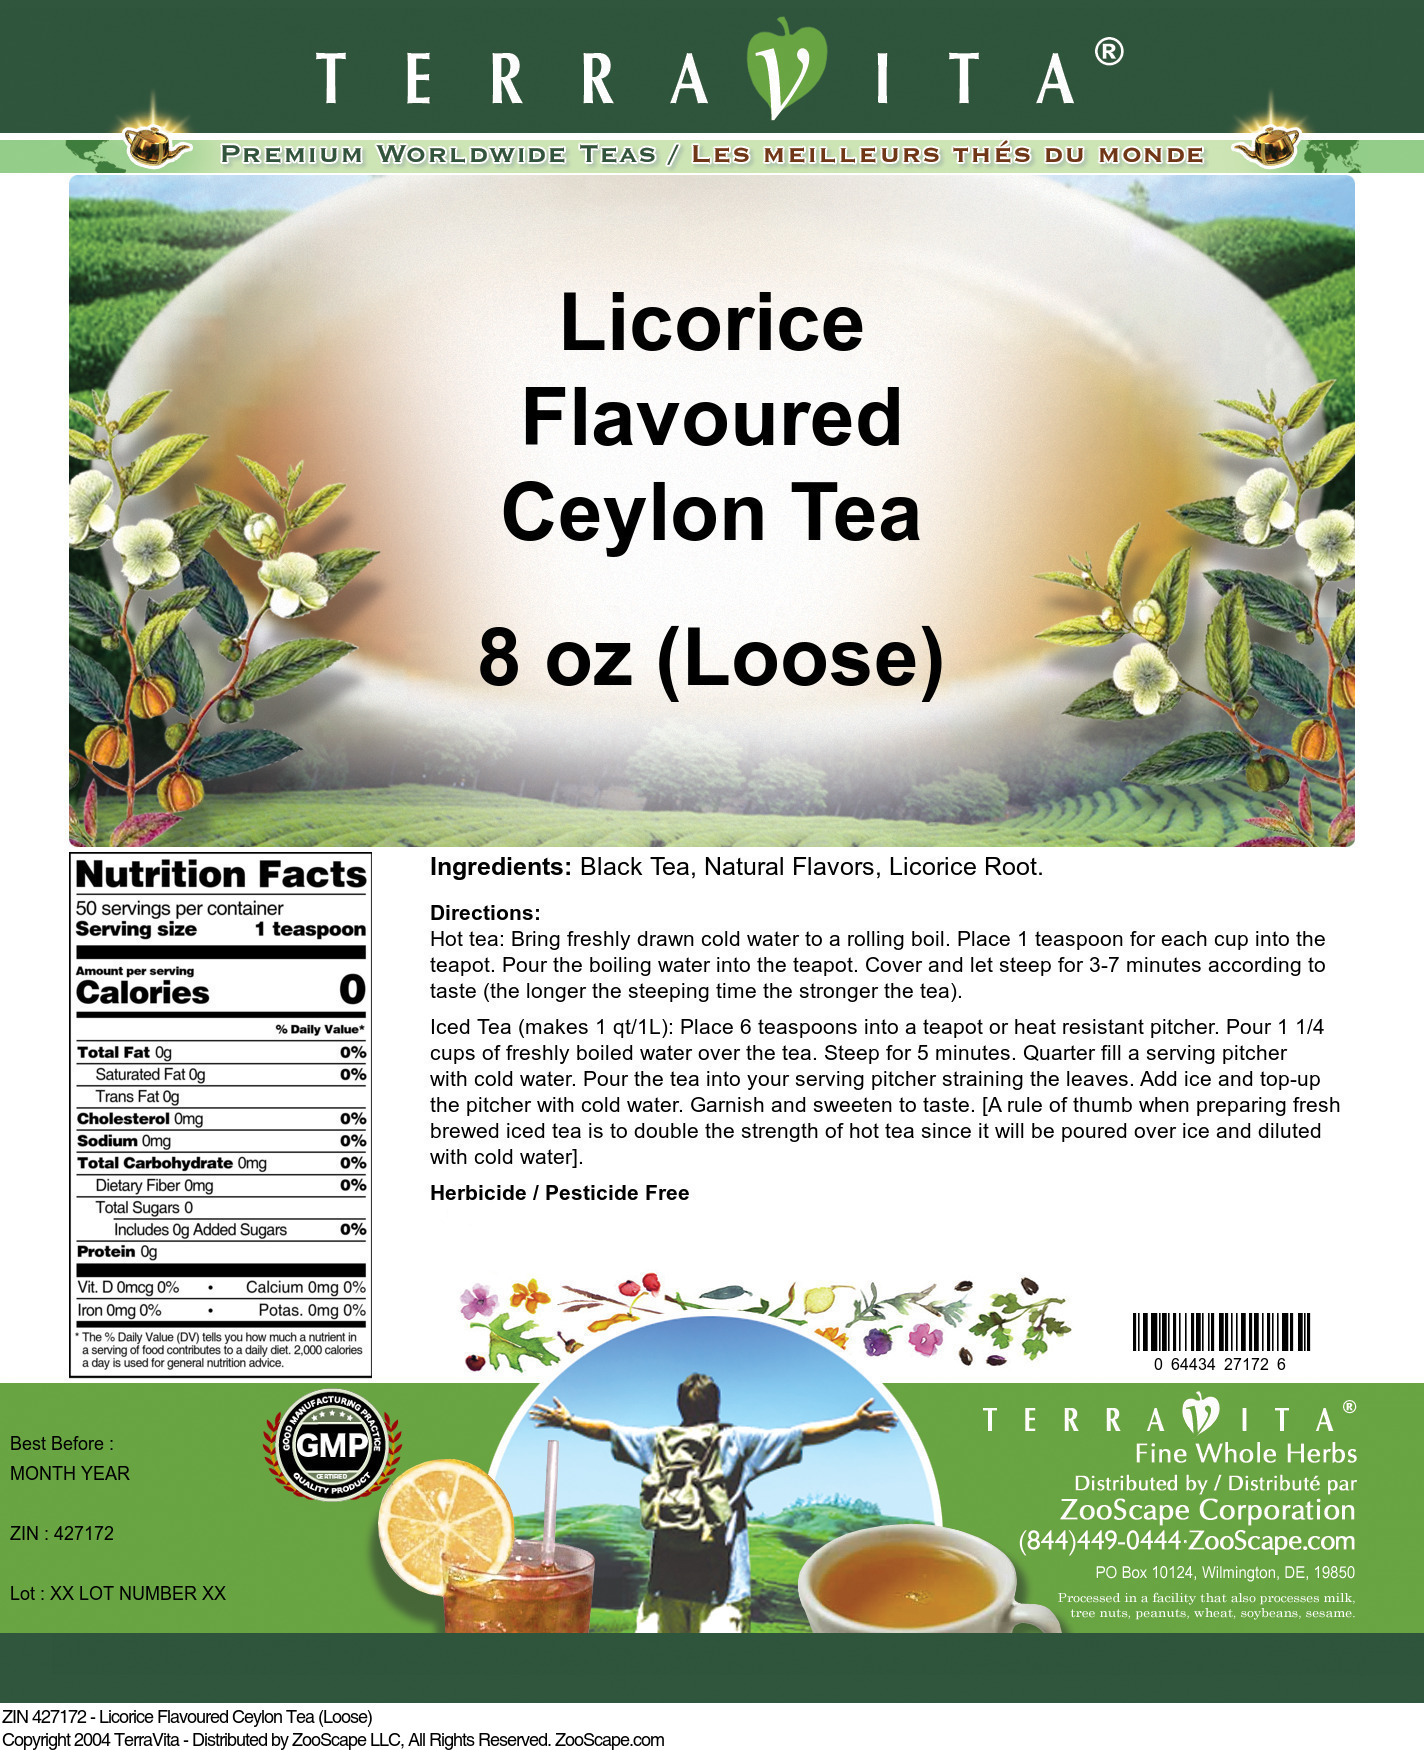 Licorice Flavoured Ceylon Tea (Loose) - Label